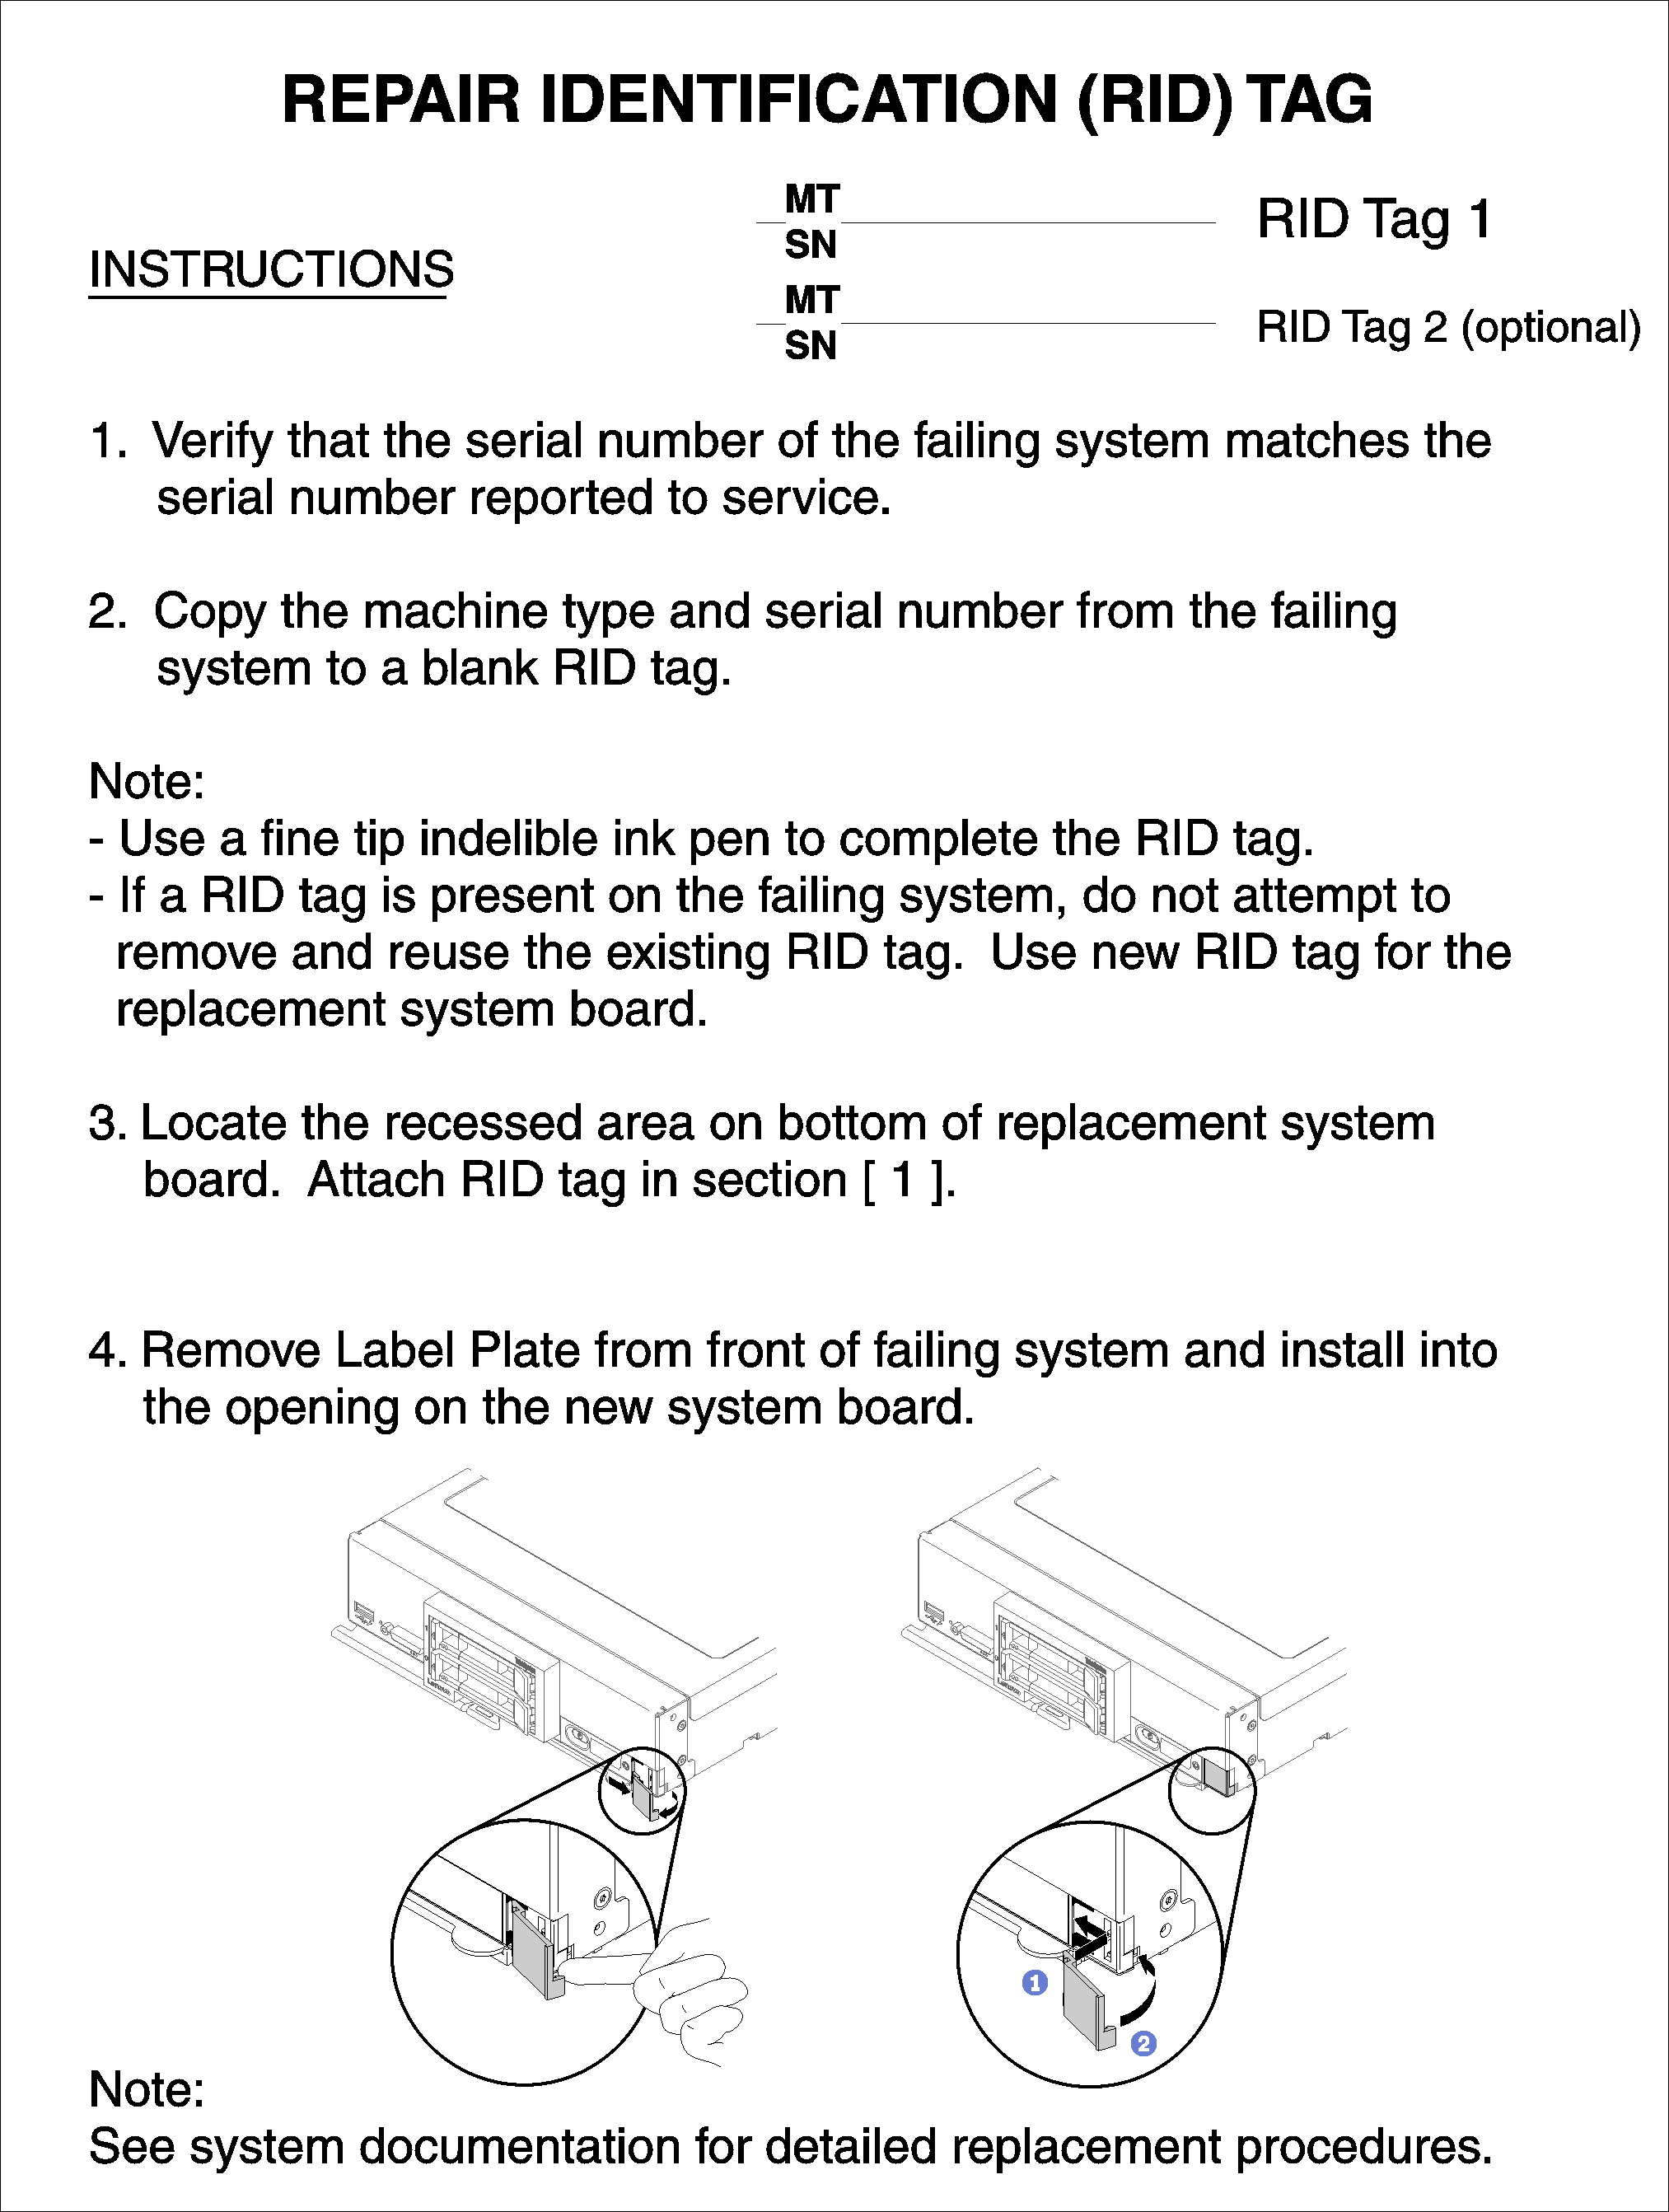 Repair Identification (RID) tag